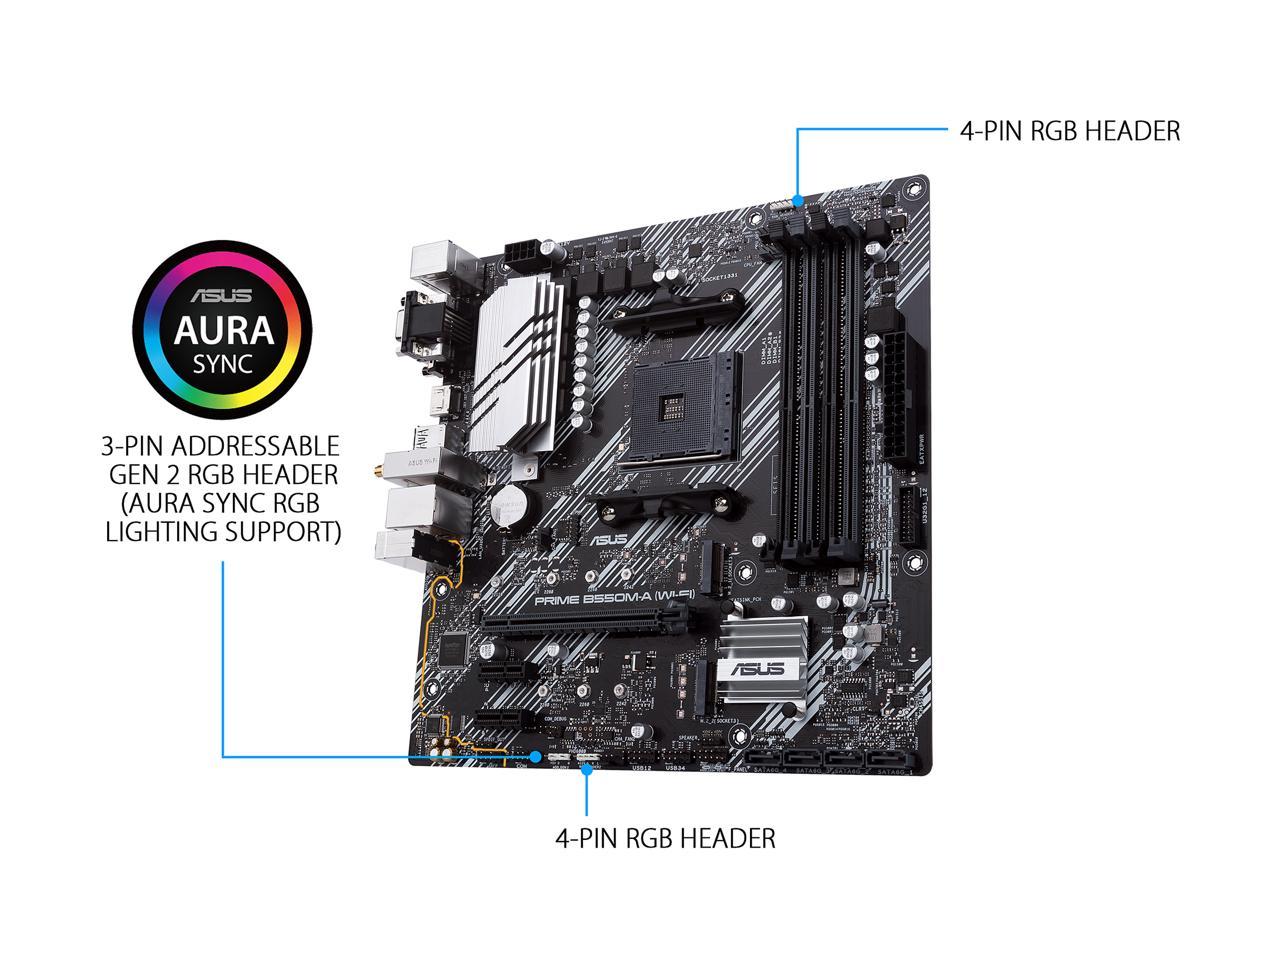 ASUS Prime B550M-A WiFi AMD AM4 (3rd Gen Ryzen) Micro ATX Motherboard (PCIe 4.0, WiFi 6, ECC Memory, 1Gb LAN, HDMI 2.1/D-Sub, 4K@60HZ, Addressable Gen 2 RGB Header and Aura Sync)